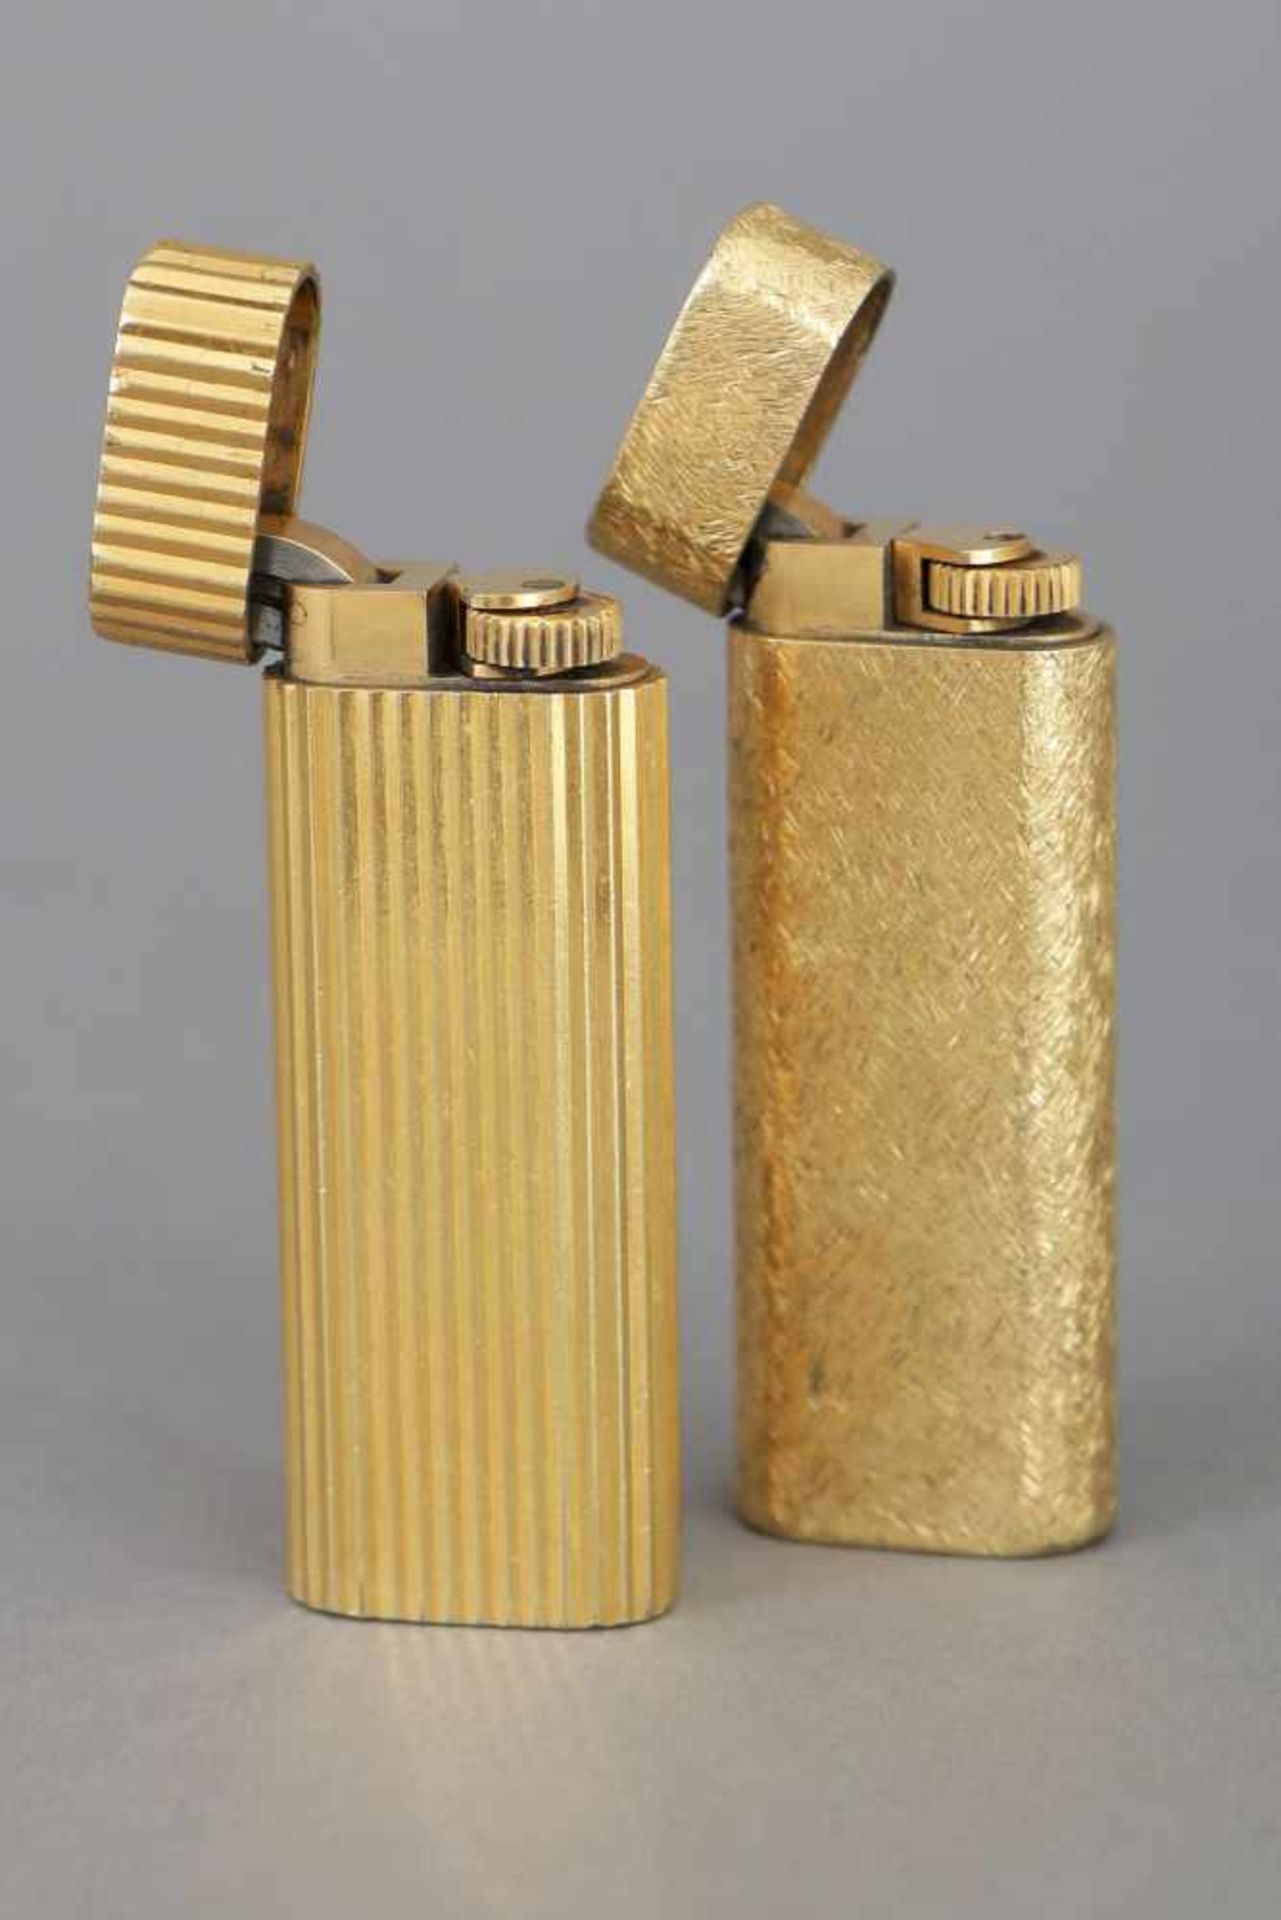 2 CARTIER Feuerzeugevergoldetes Metall, schlanke, hohe Form, gerundet, 1x Rillendekor, 1x Kerbdekor,